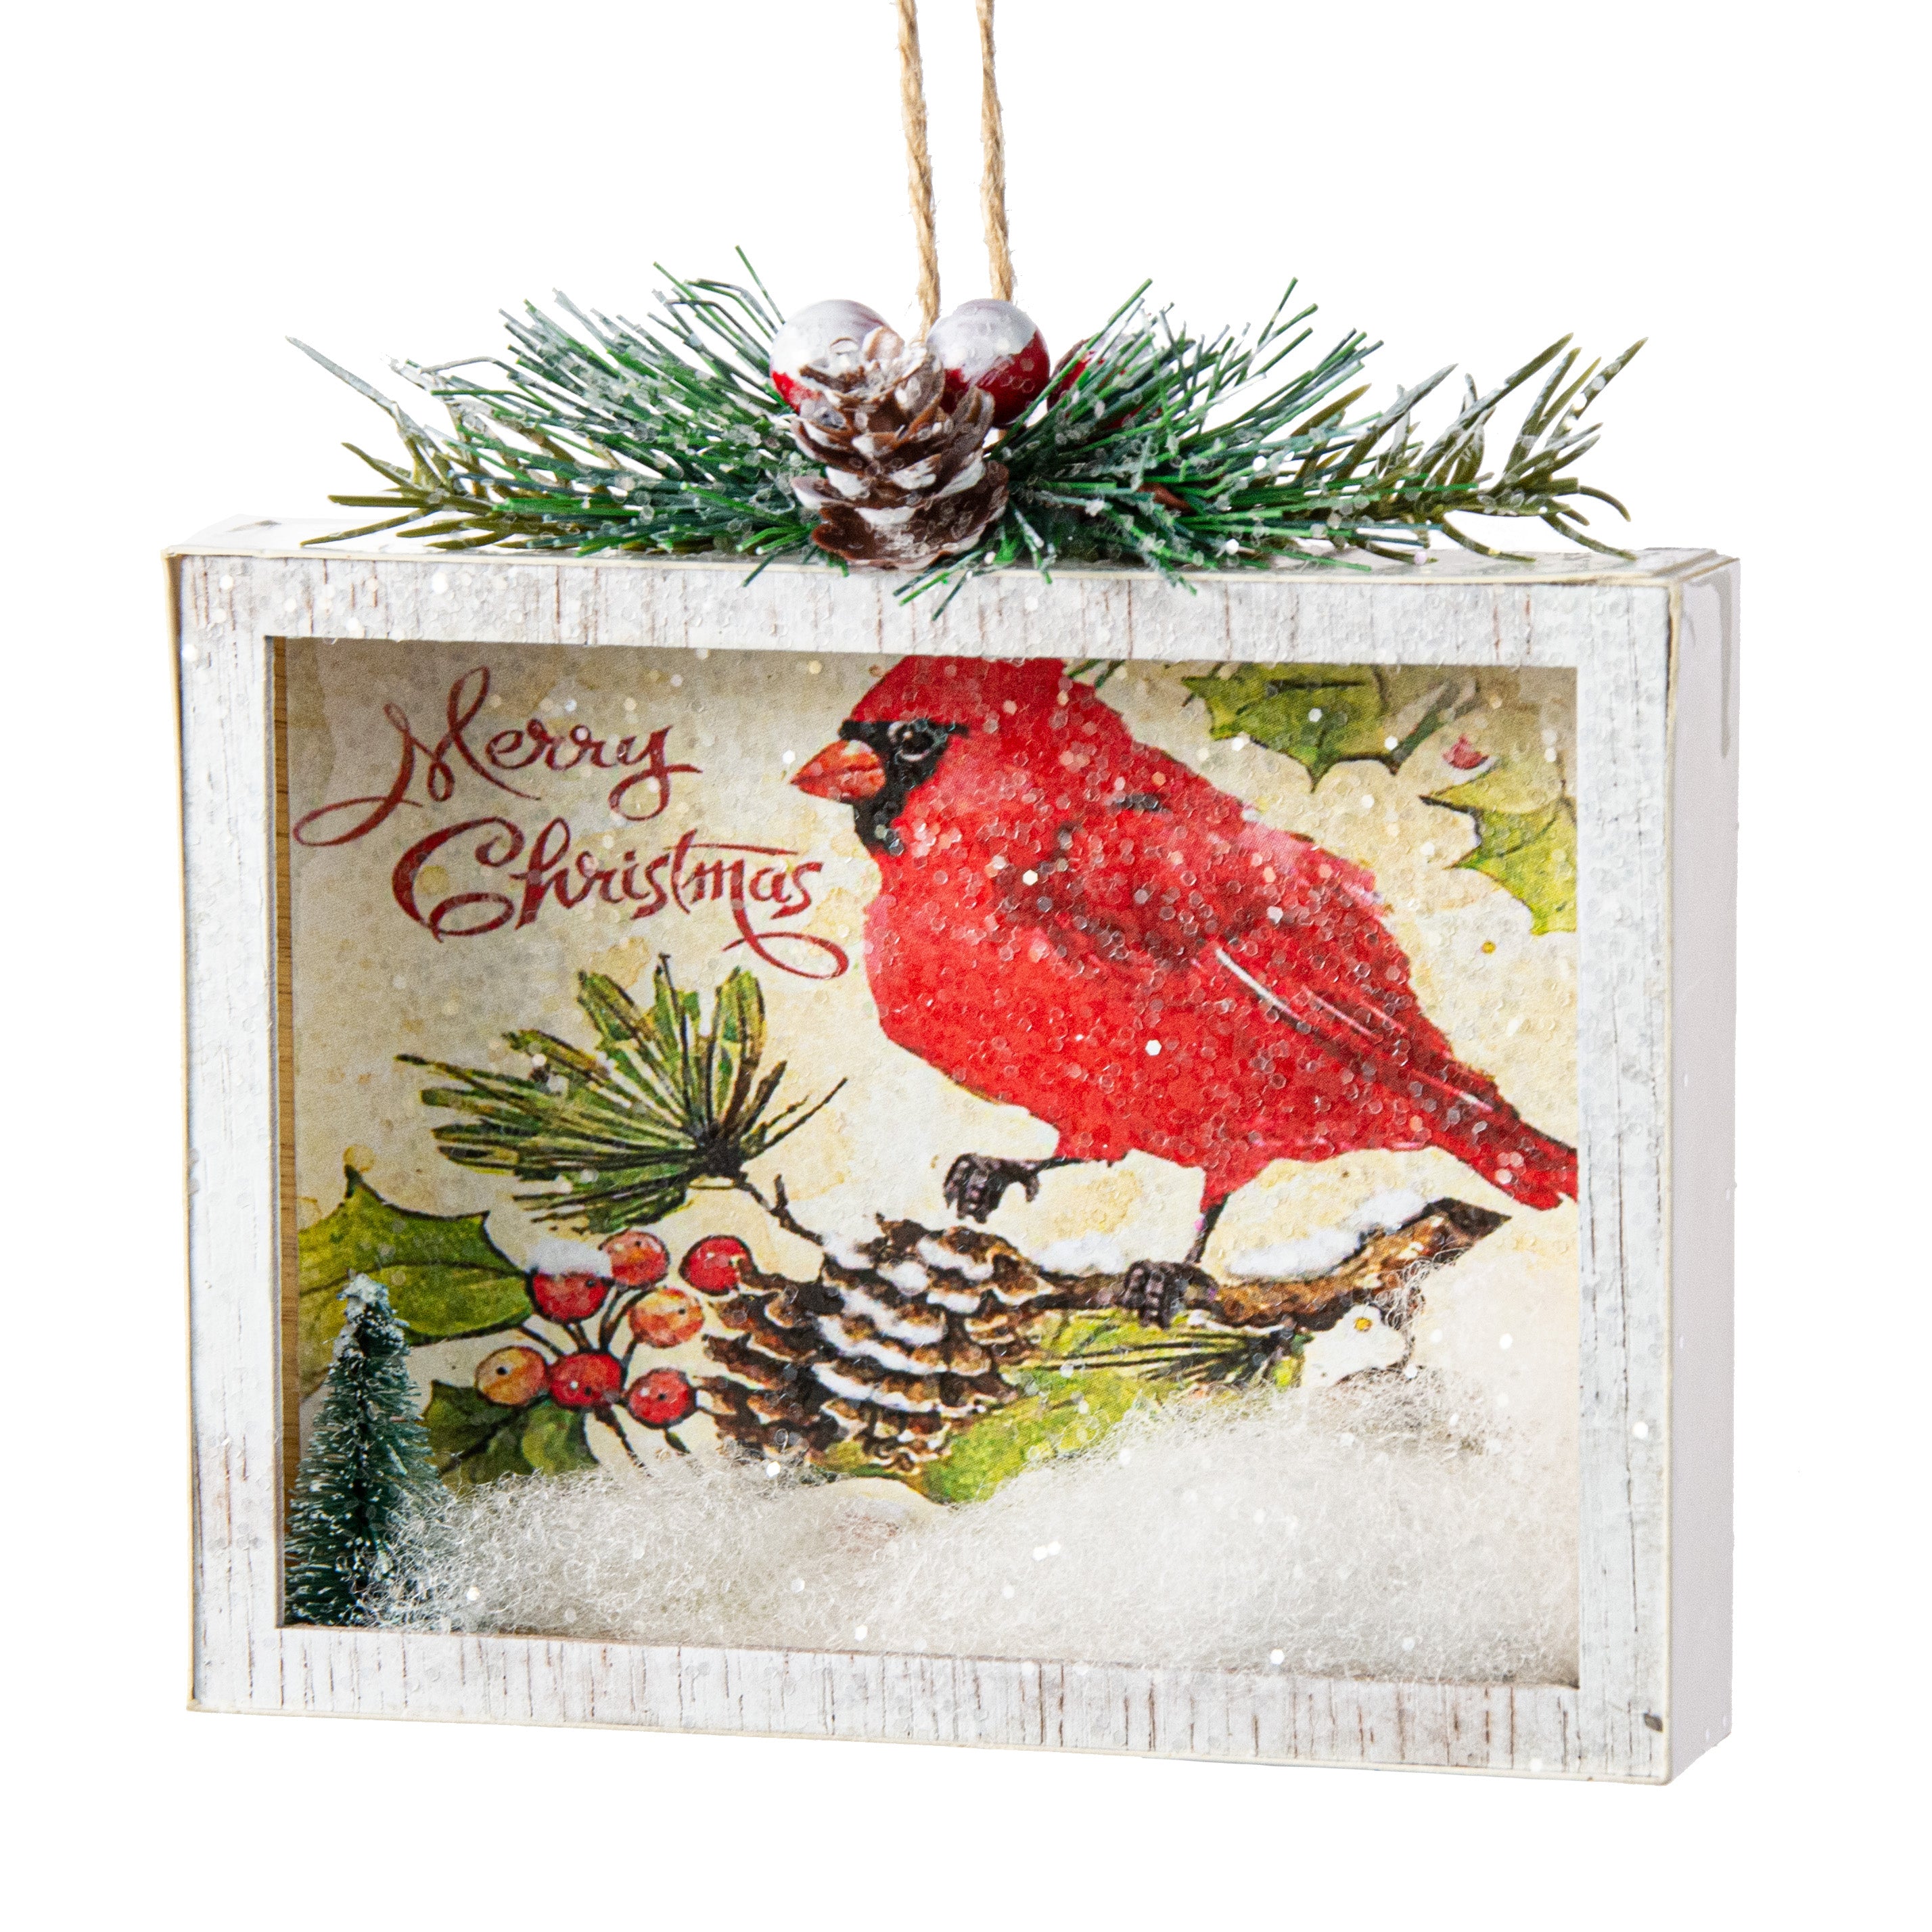 5" Lighted Cardinal Ornament